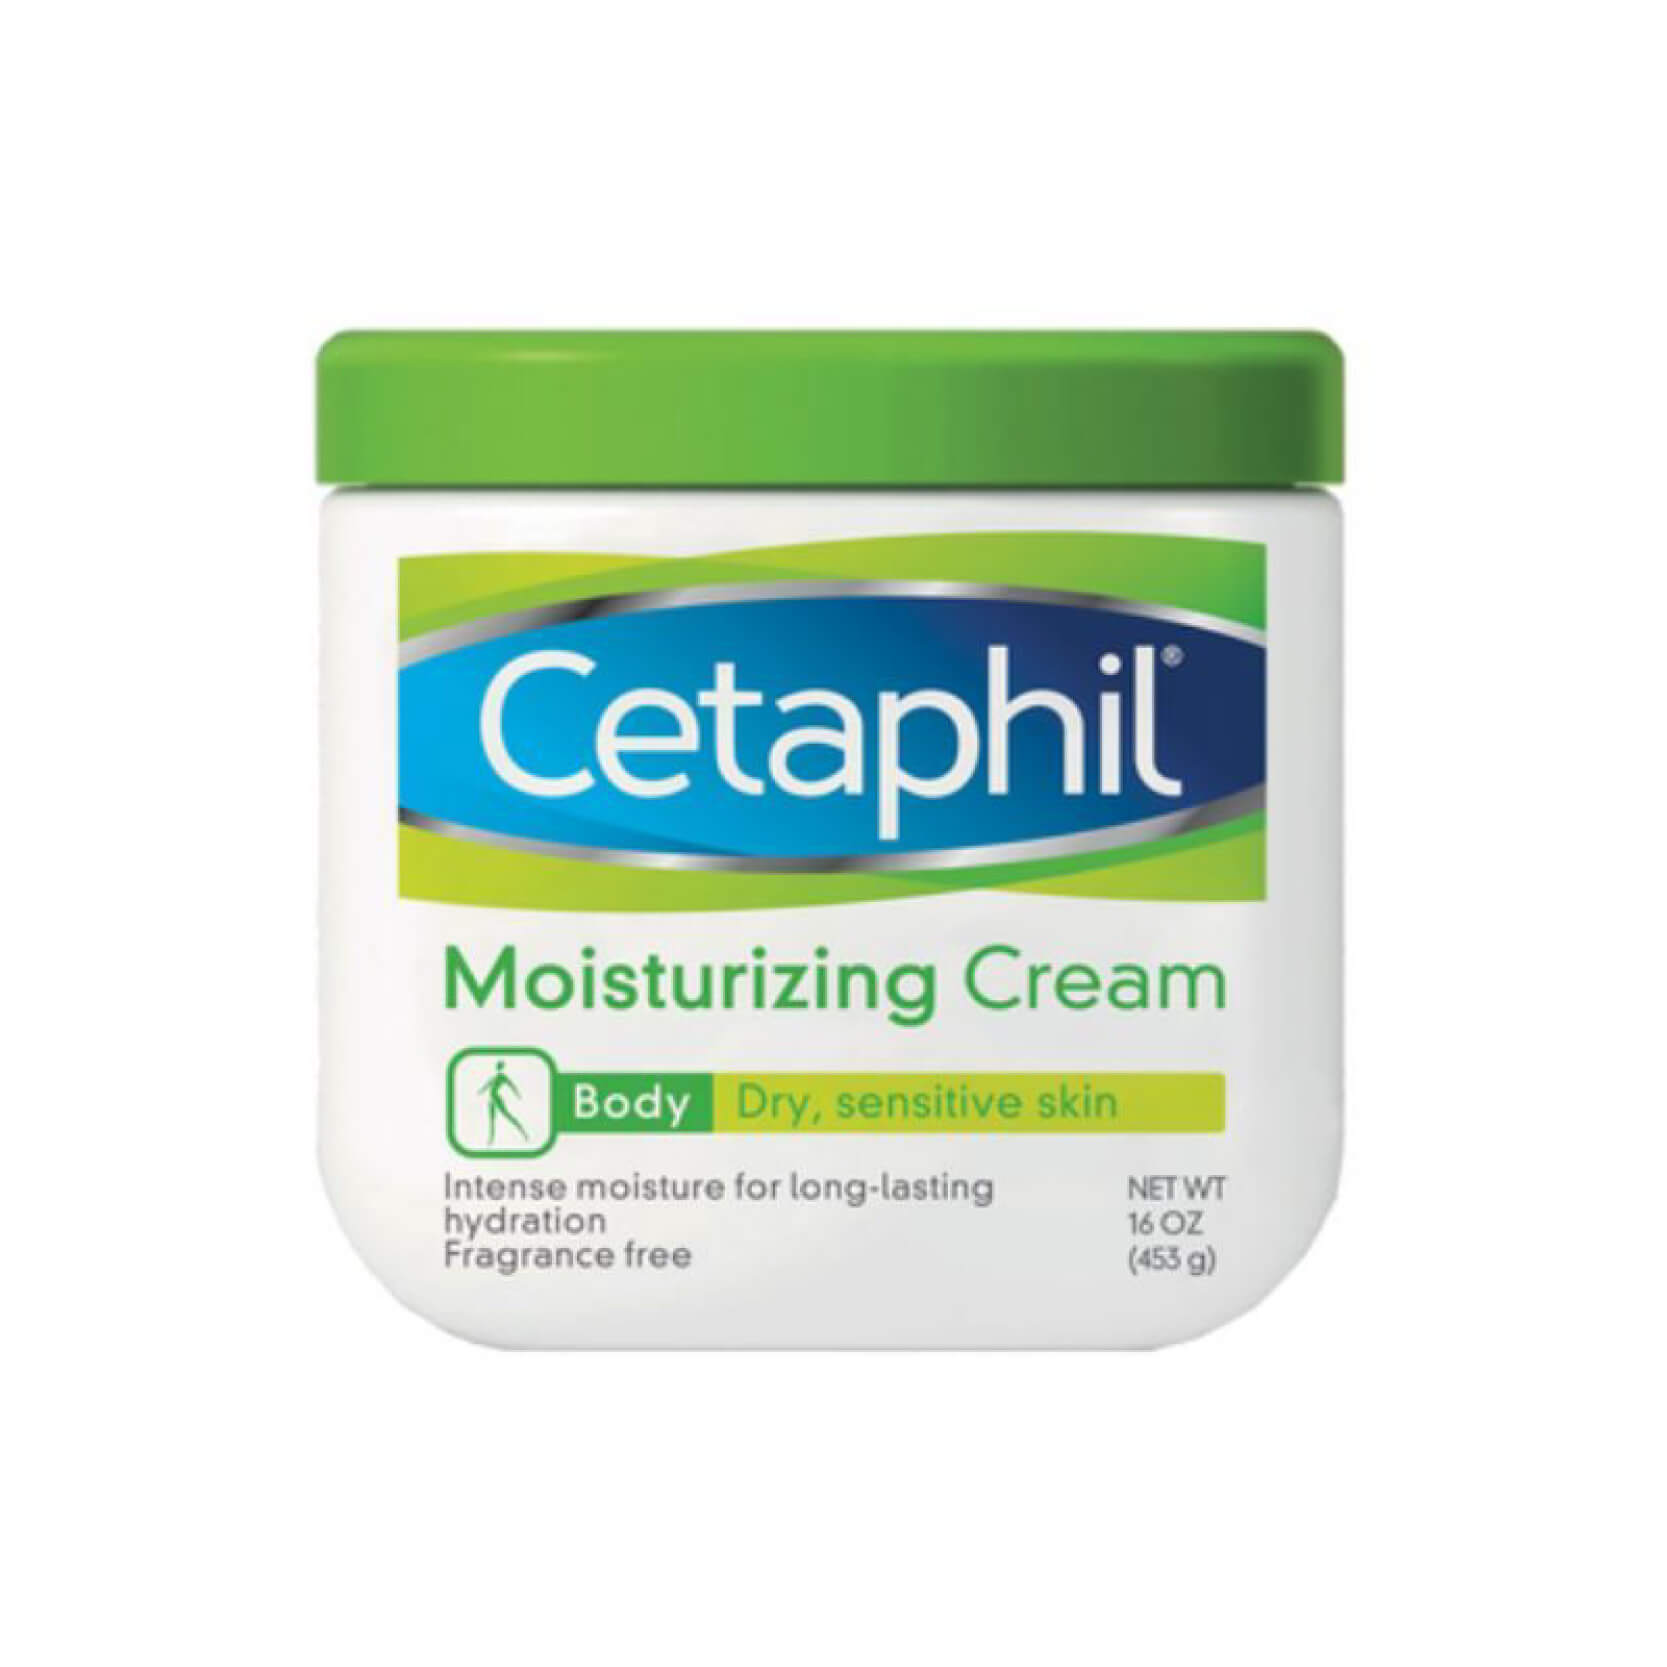 Motherhood Choice Awards 2022 Winner - Cetaphil Moisturising Cream